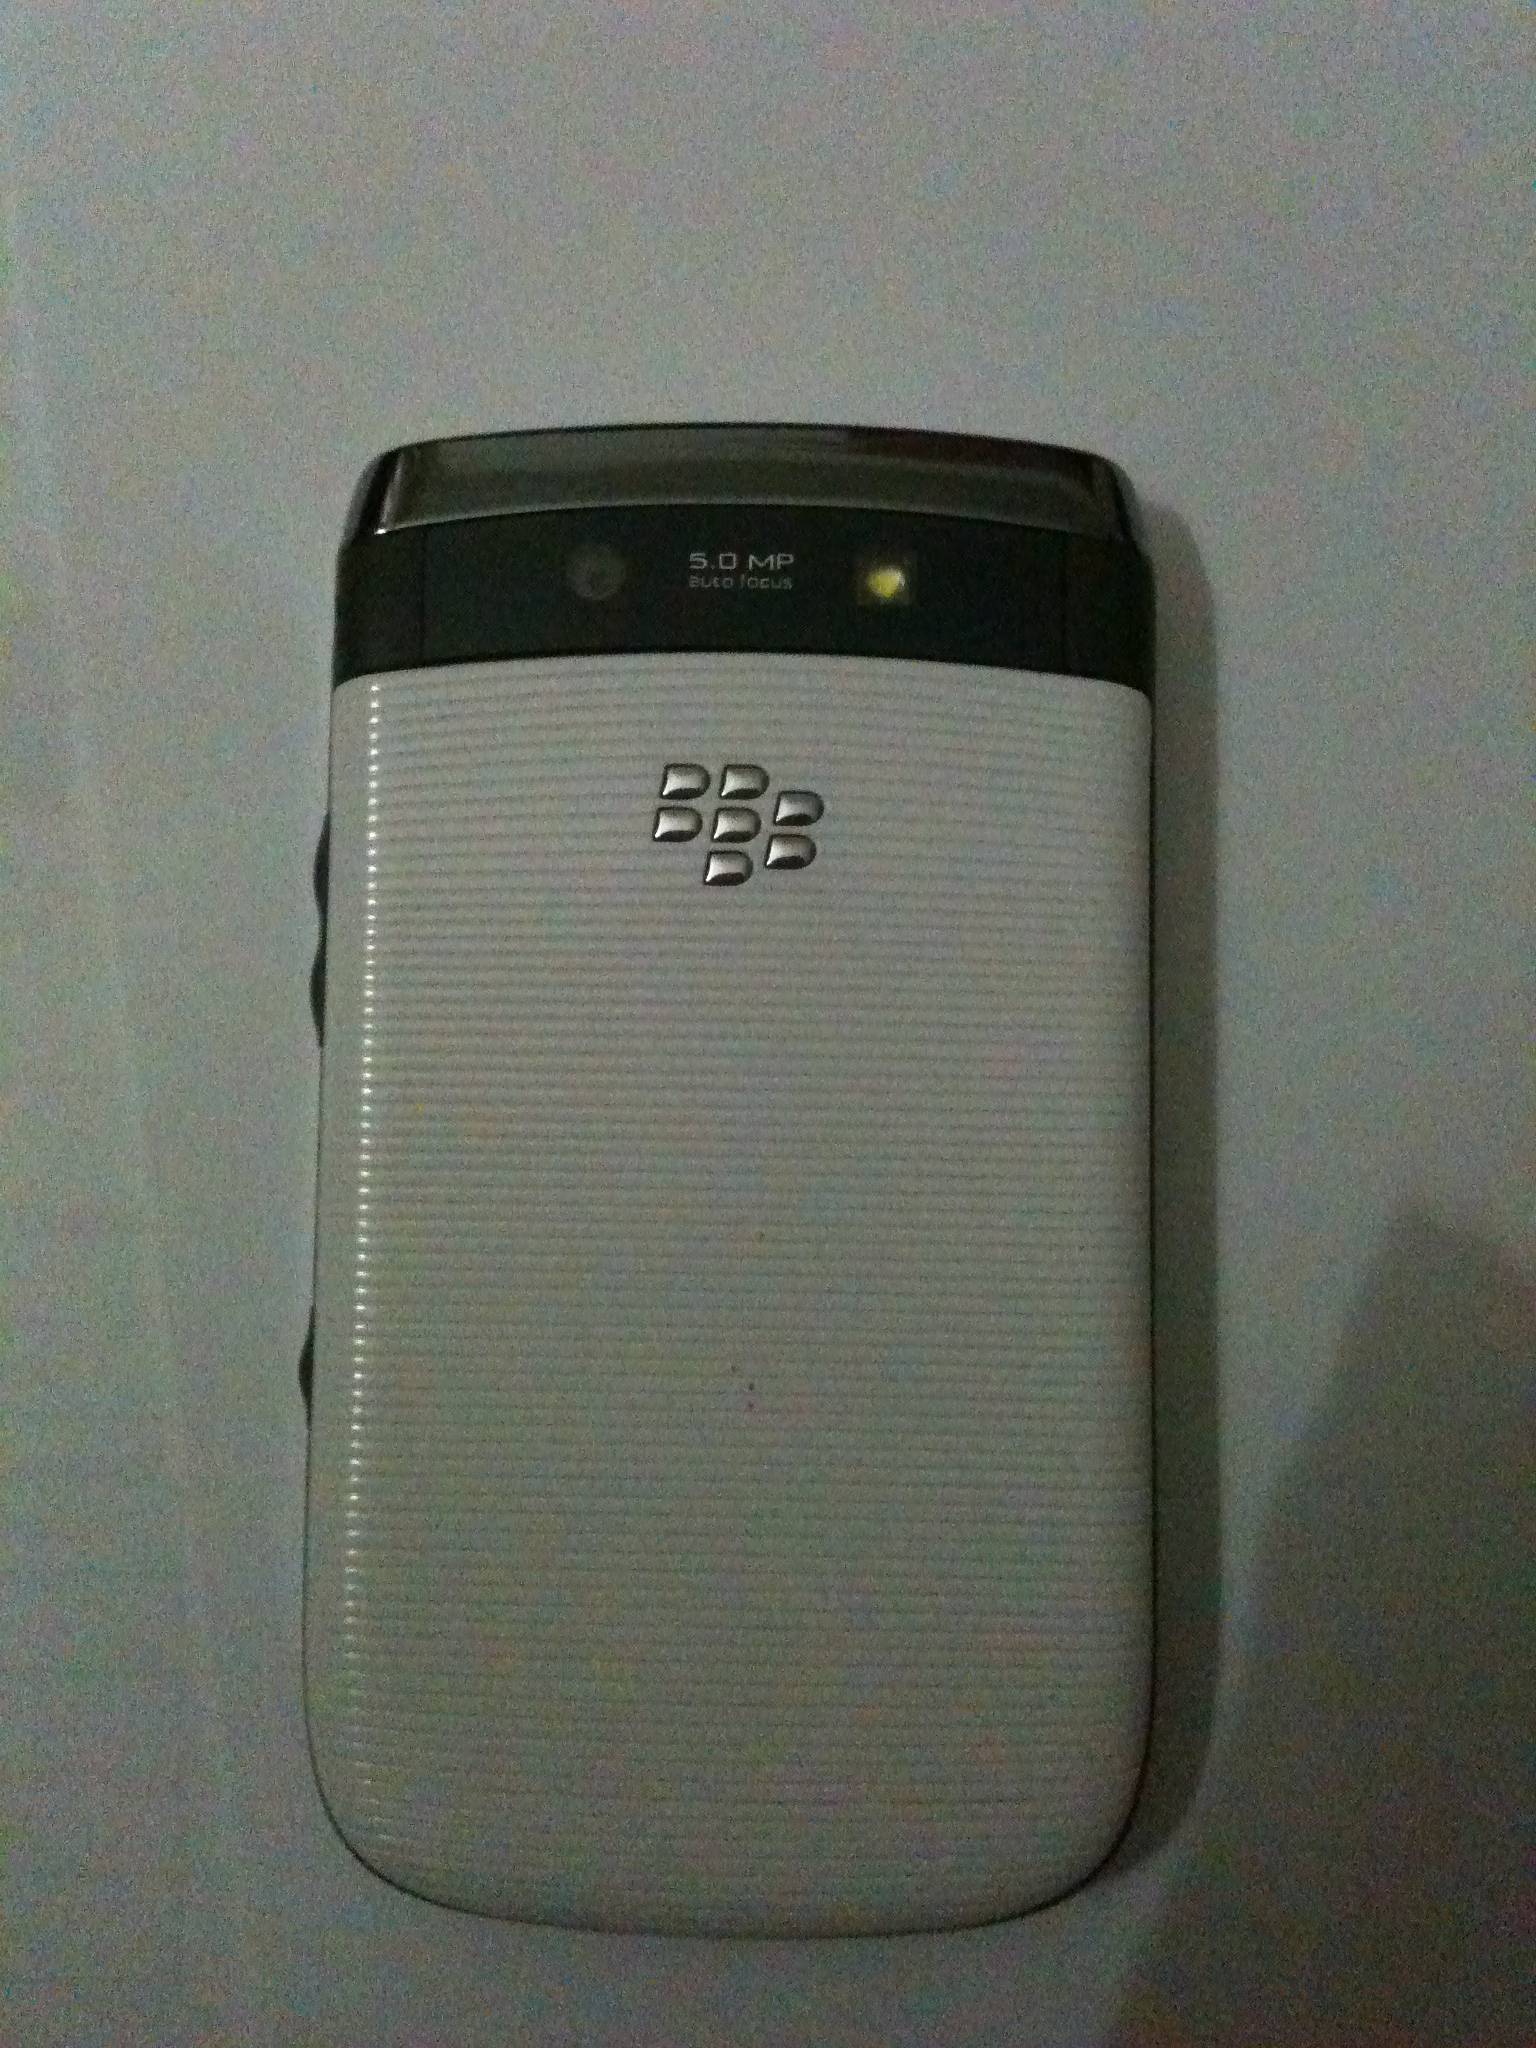 Blackberry Torch 9800 White Harga